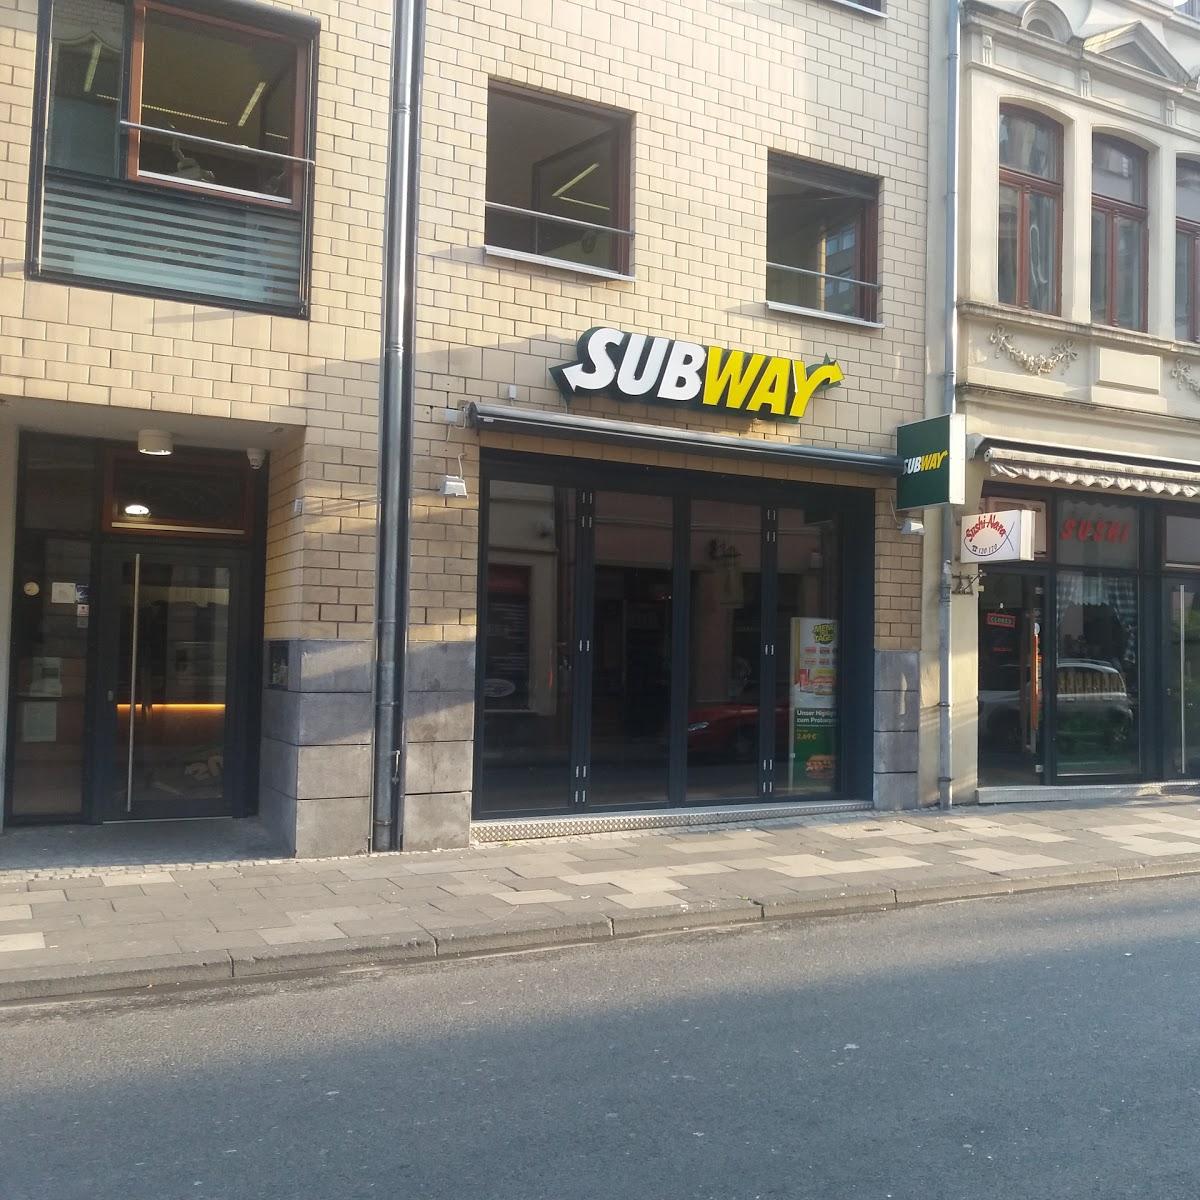 Restaurant "Subway" in Köln